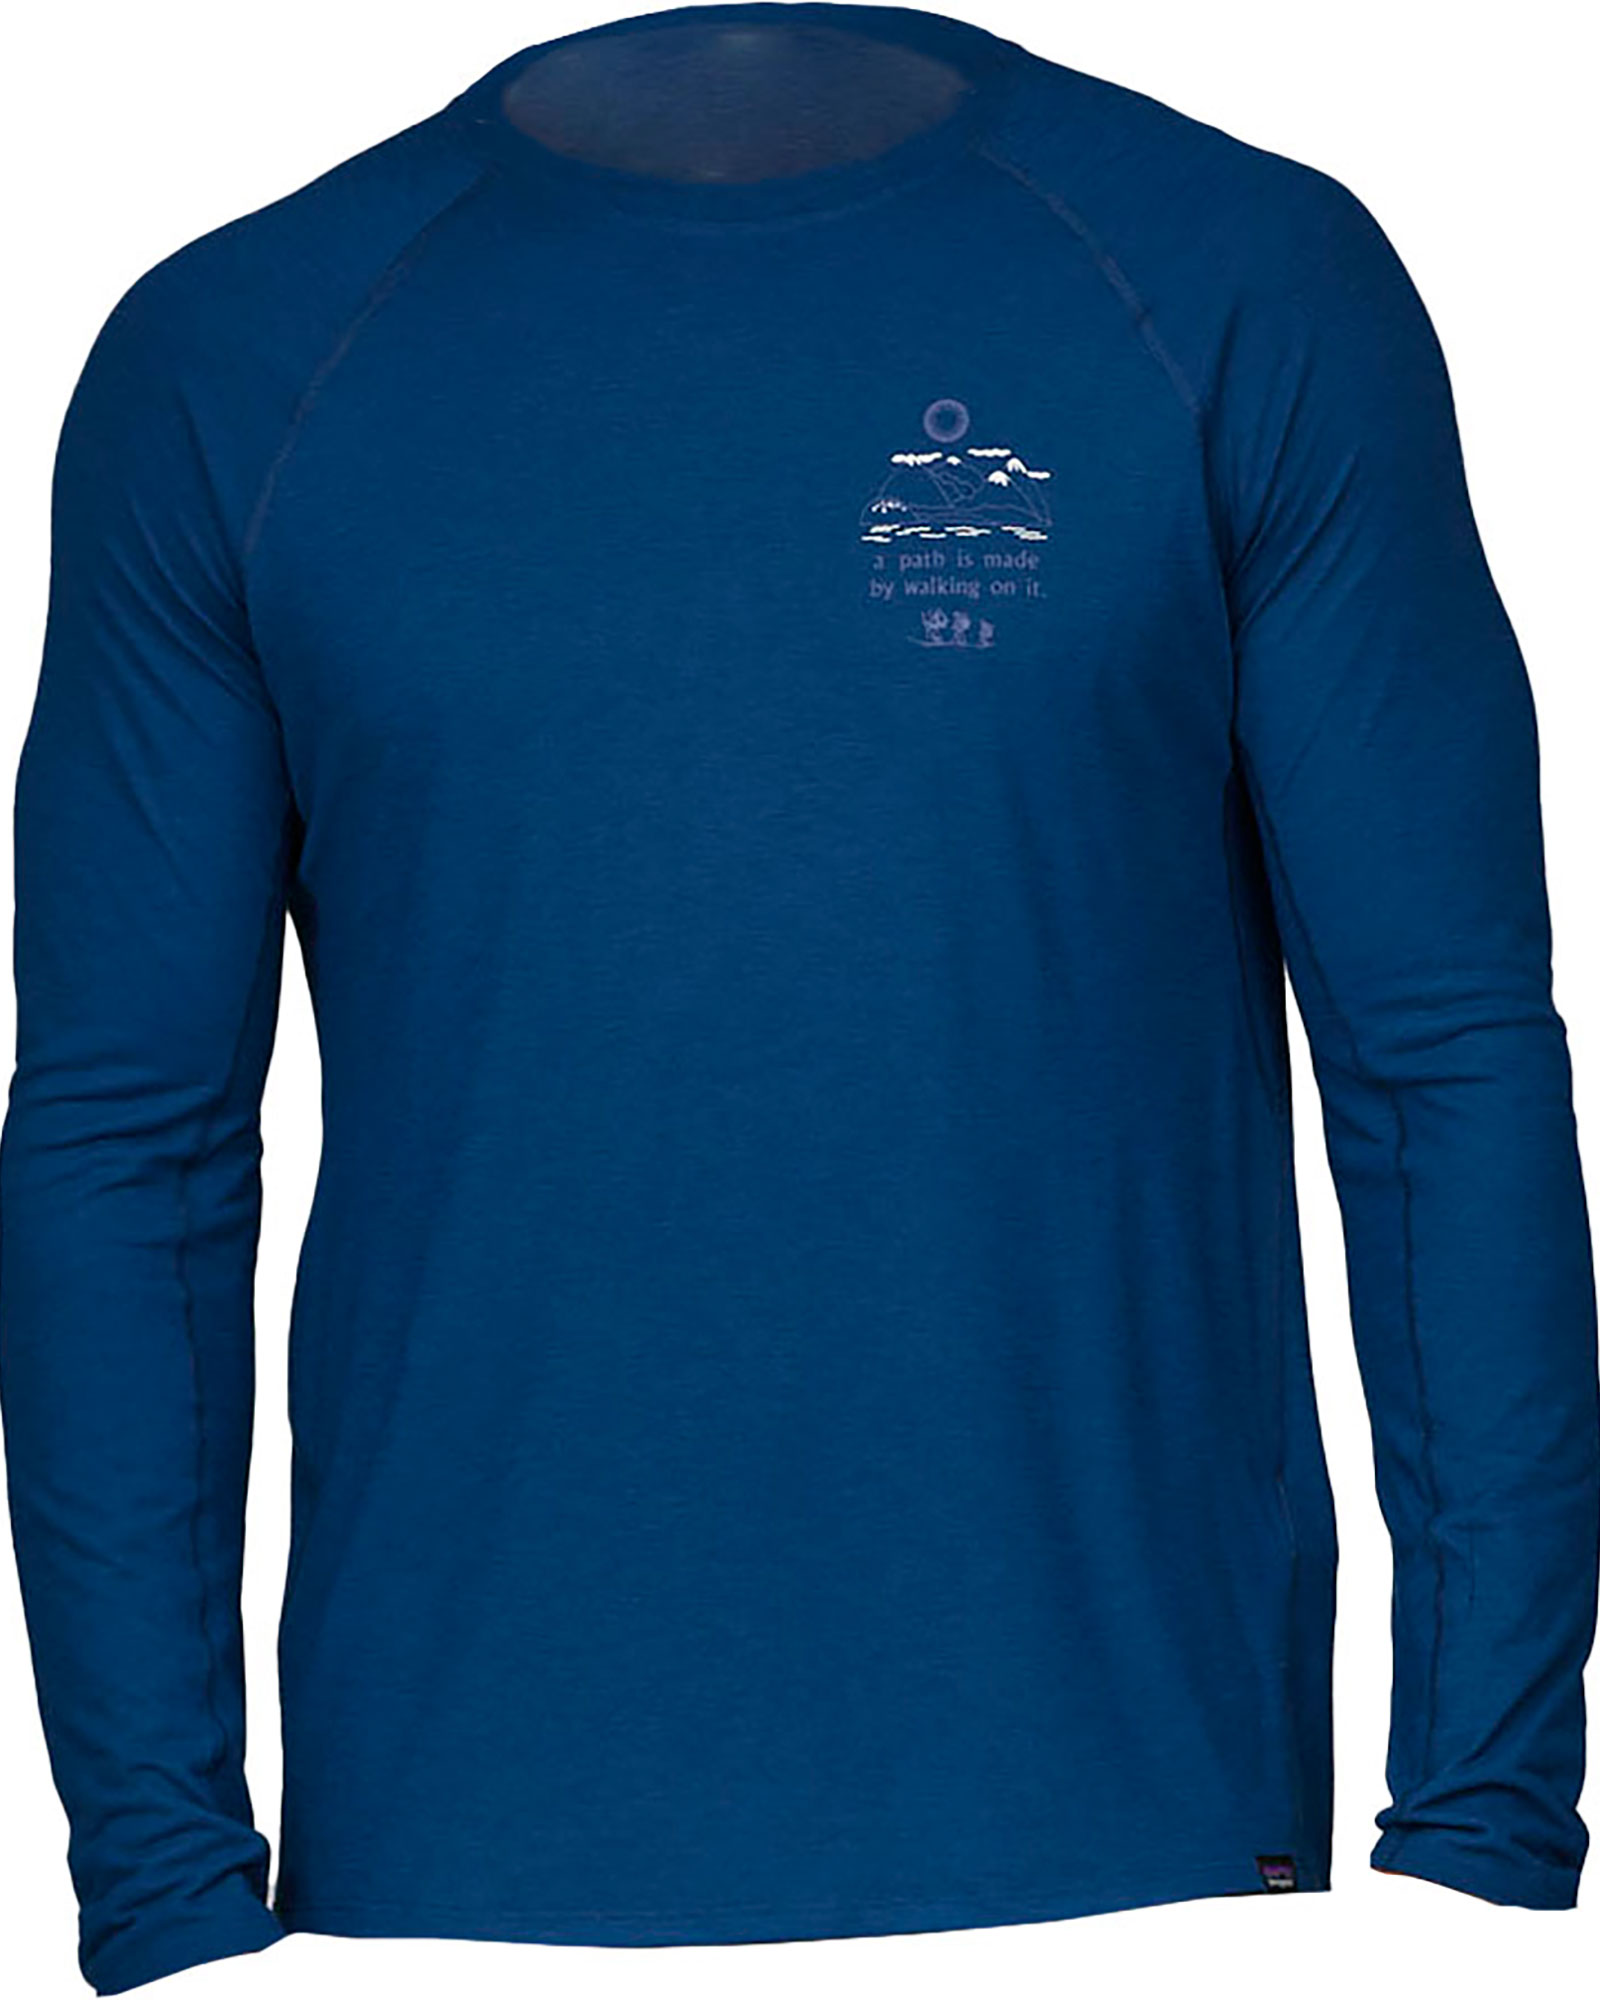 Patagonia Men’s Cap Cool Trail Long Sleeved Shirt - Lagom Blue S